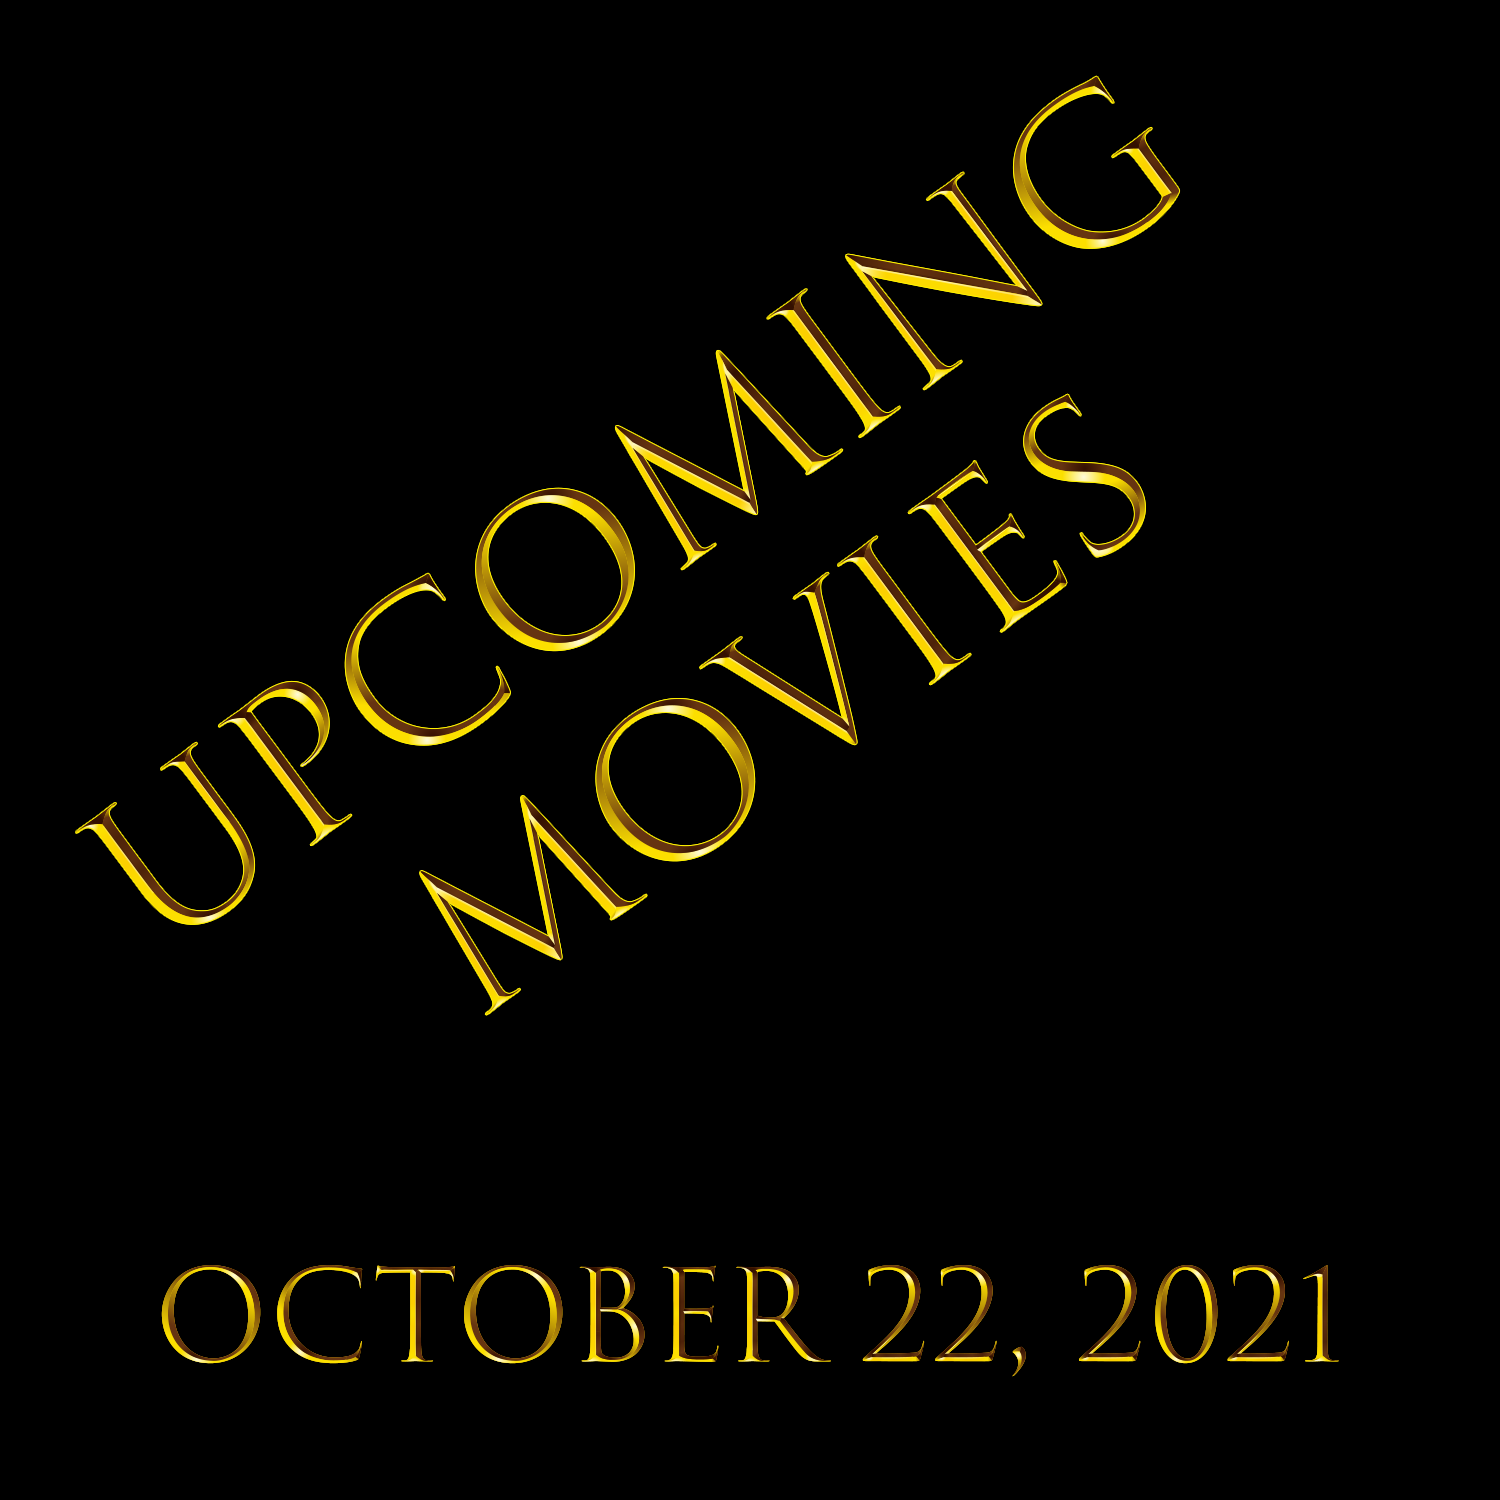 Upcoming Movies - Oct 22, 2021